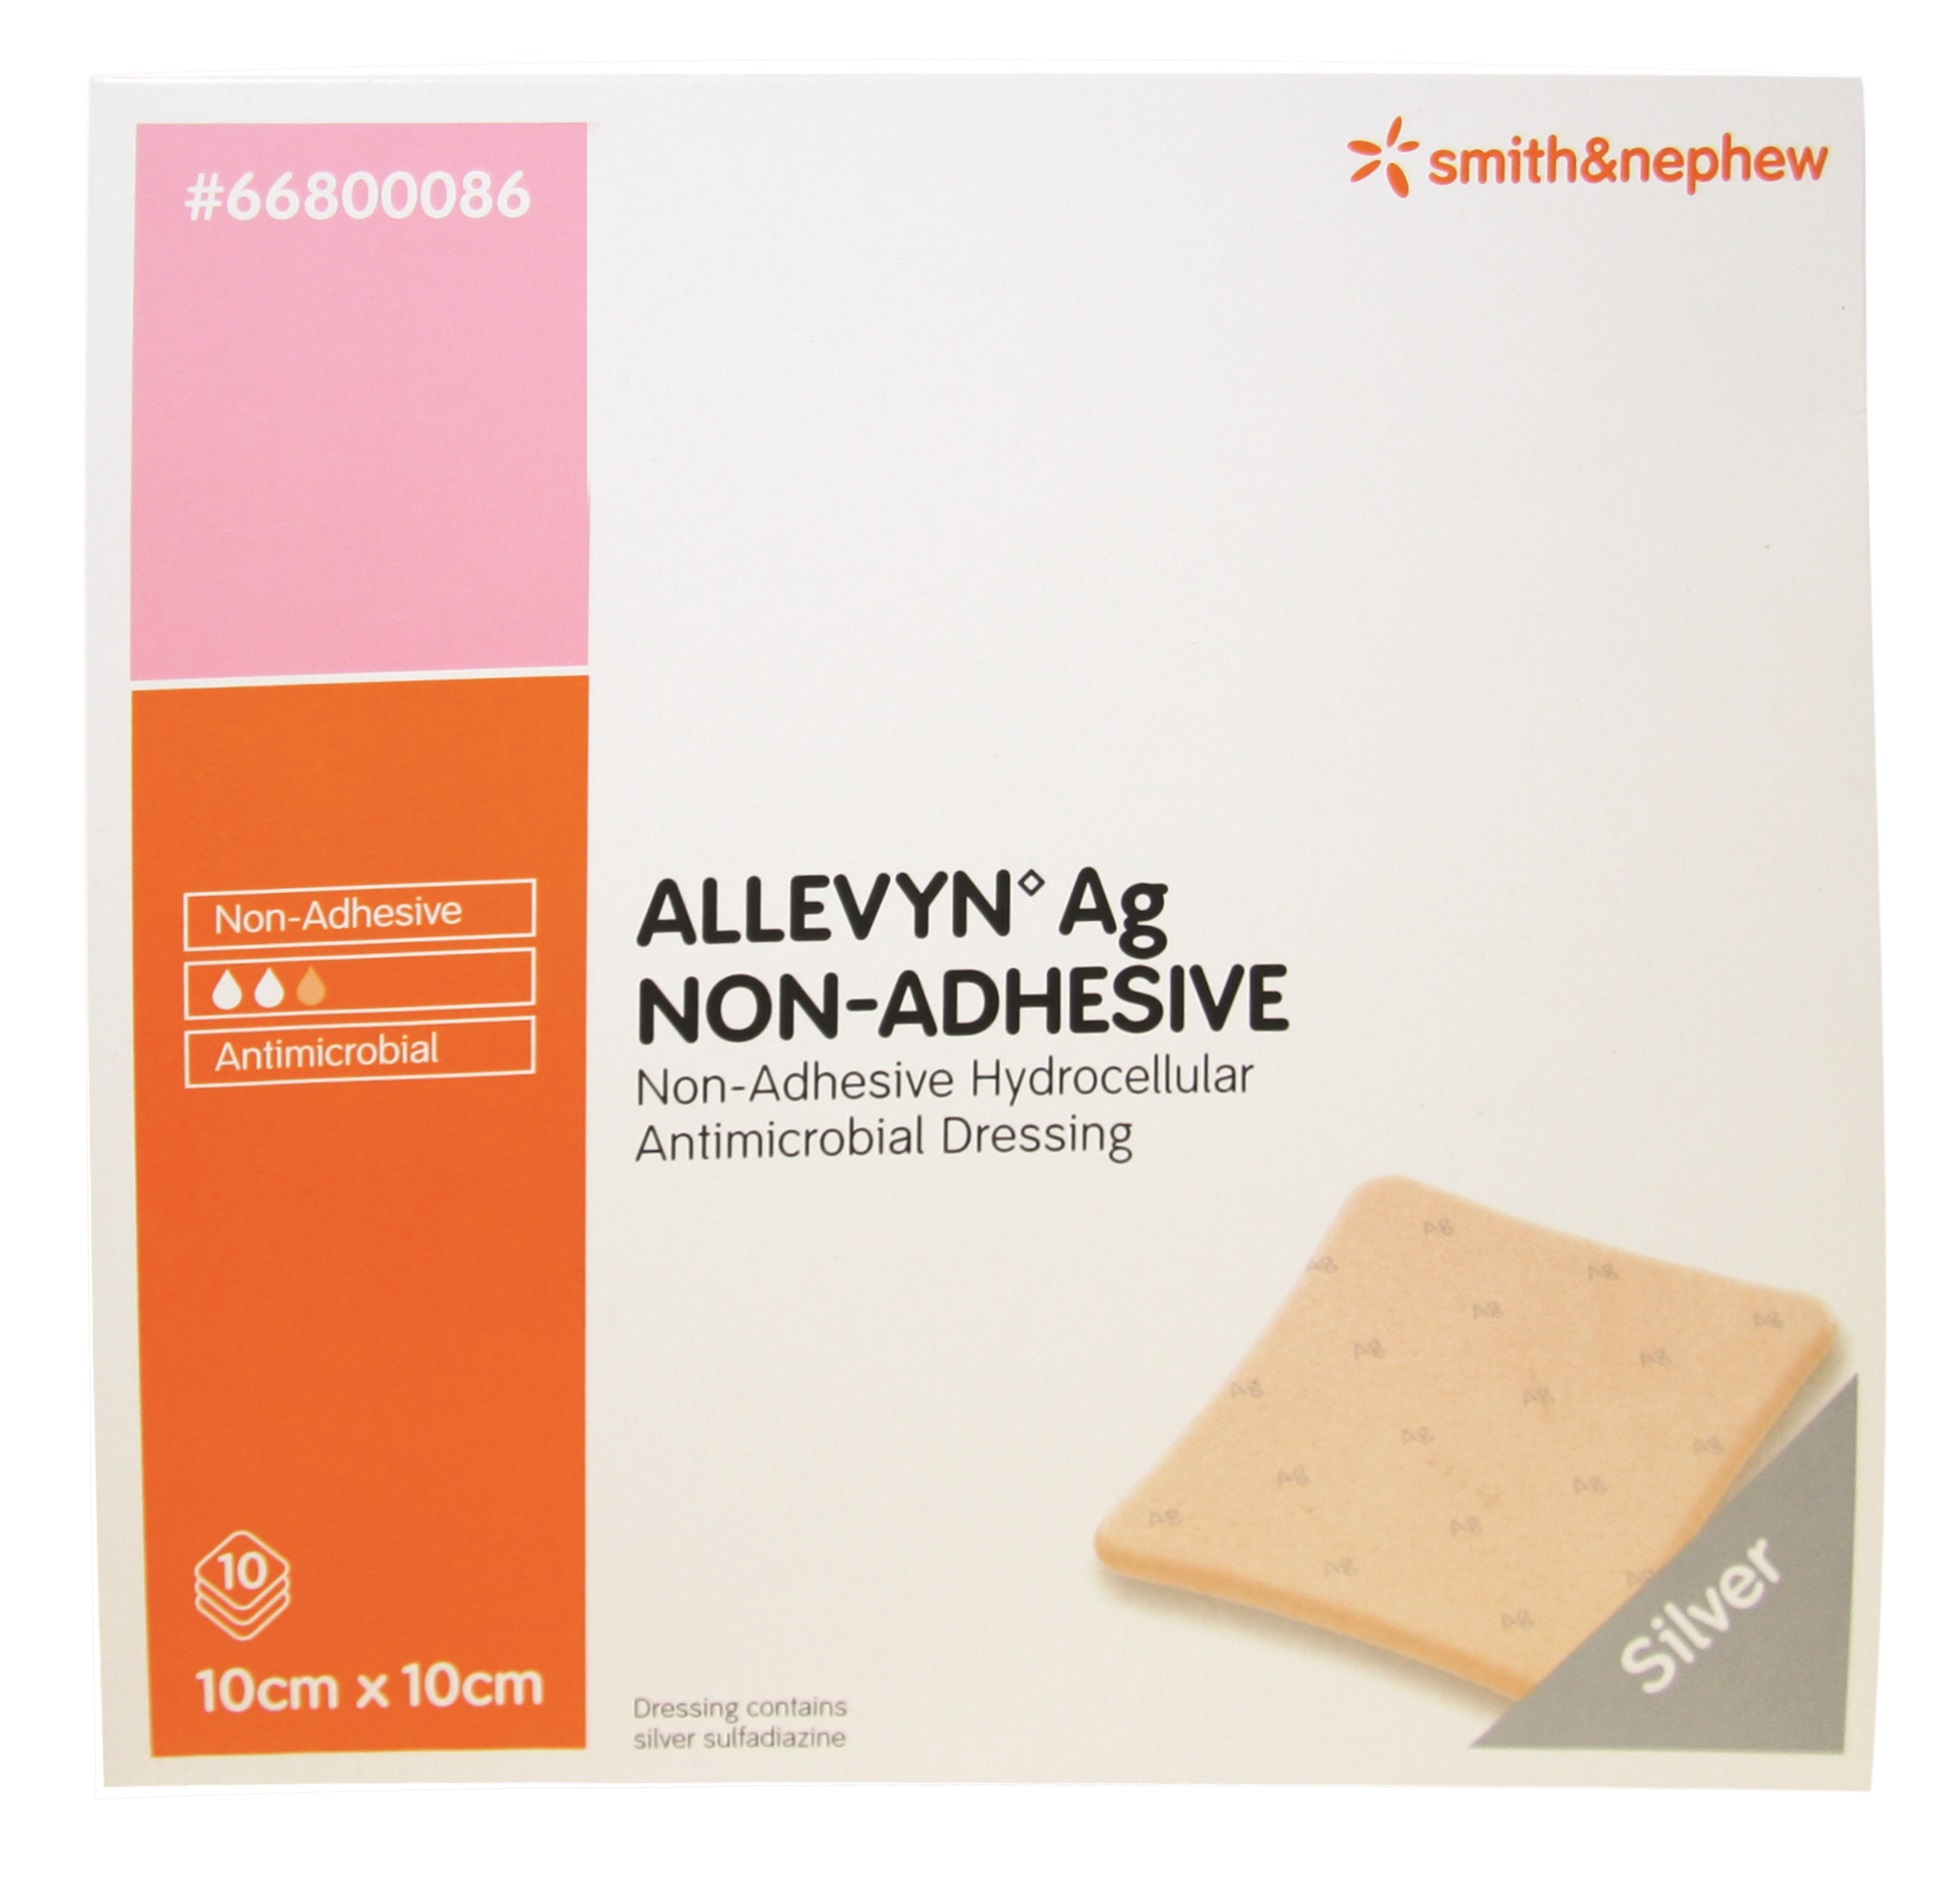 Allevyn AG Non-Adhesive 10cm x 10cm image 1